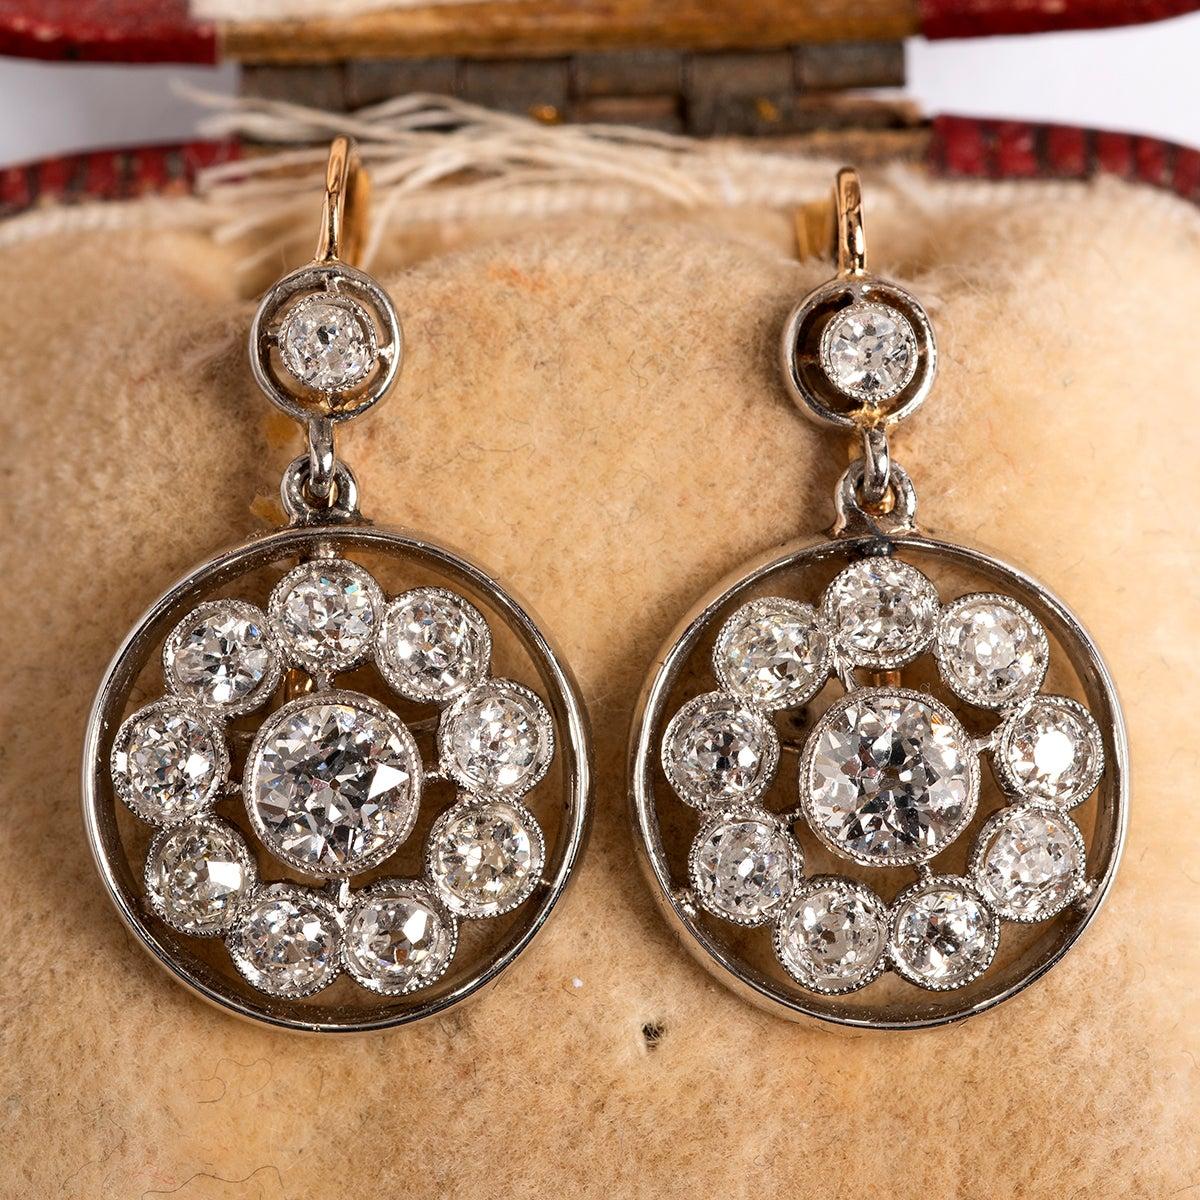 Round Cut Vintage Diamond Earrings with 22 Diamonds, 18 Karat Yellow or White Gold